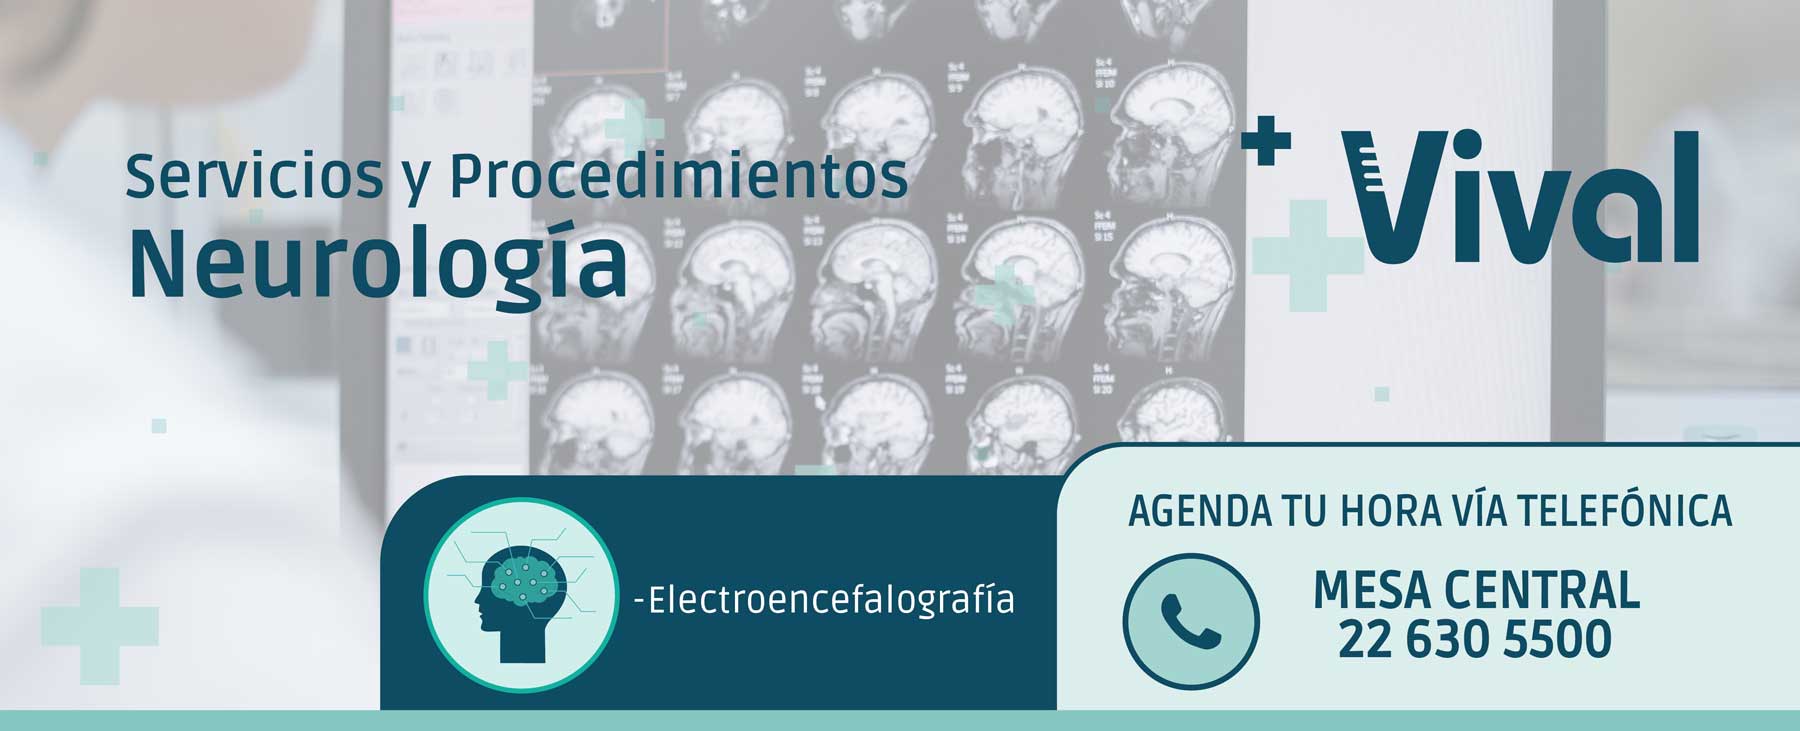 banner-neurologia